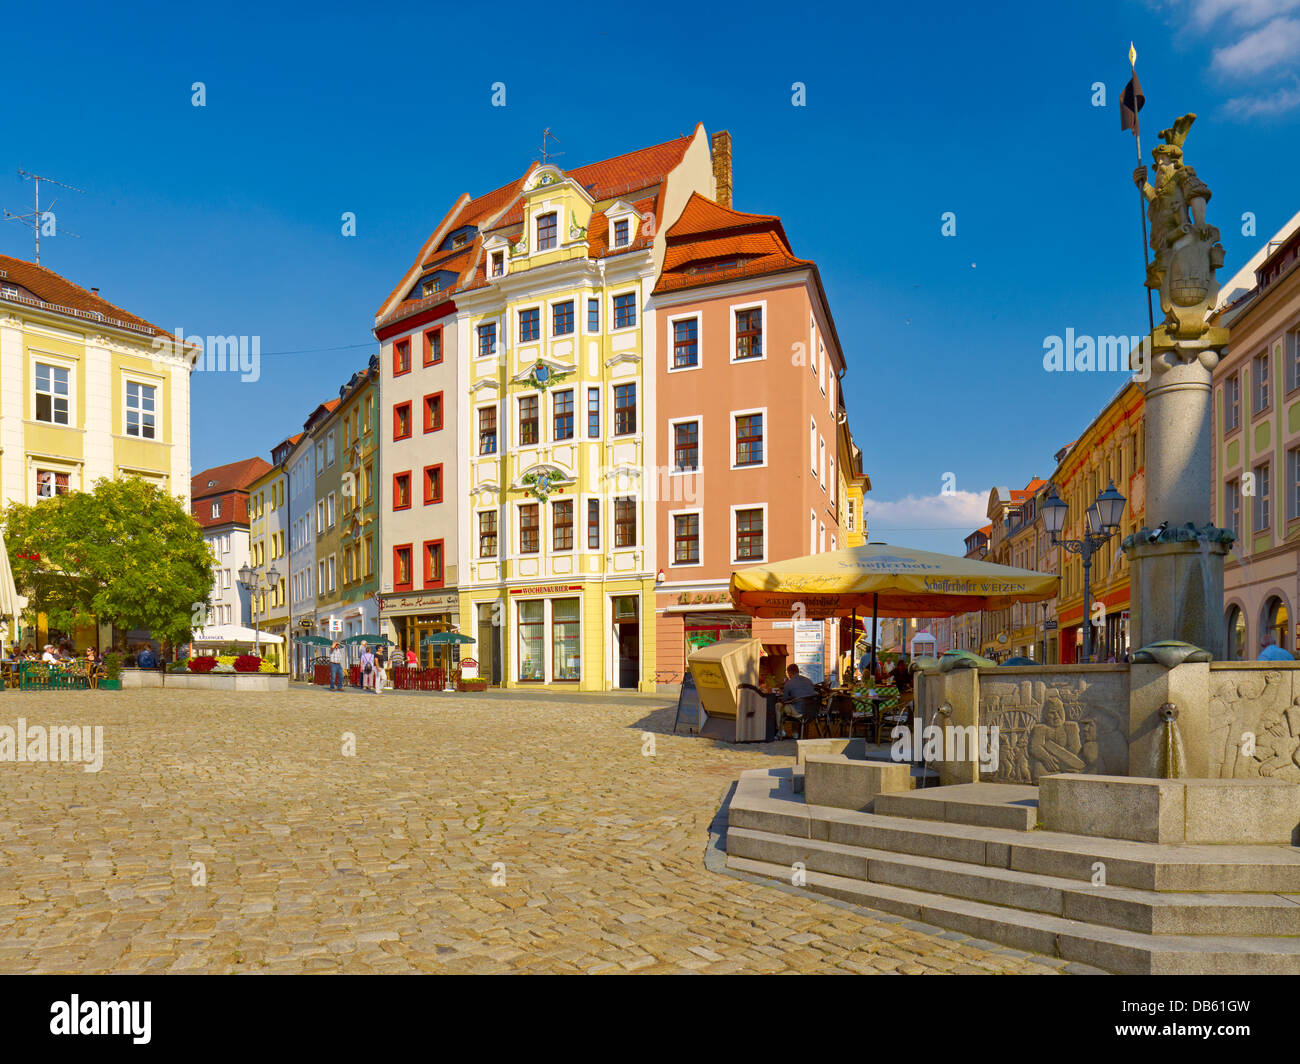 Hauptmarkt market square with fountain, Bautzen, Upper Lusatia, Saxony, Germany Stock Photo